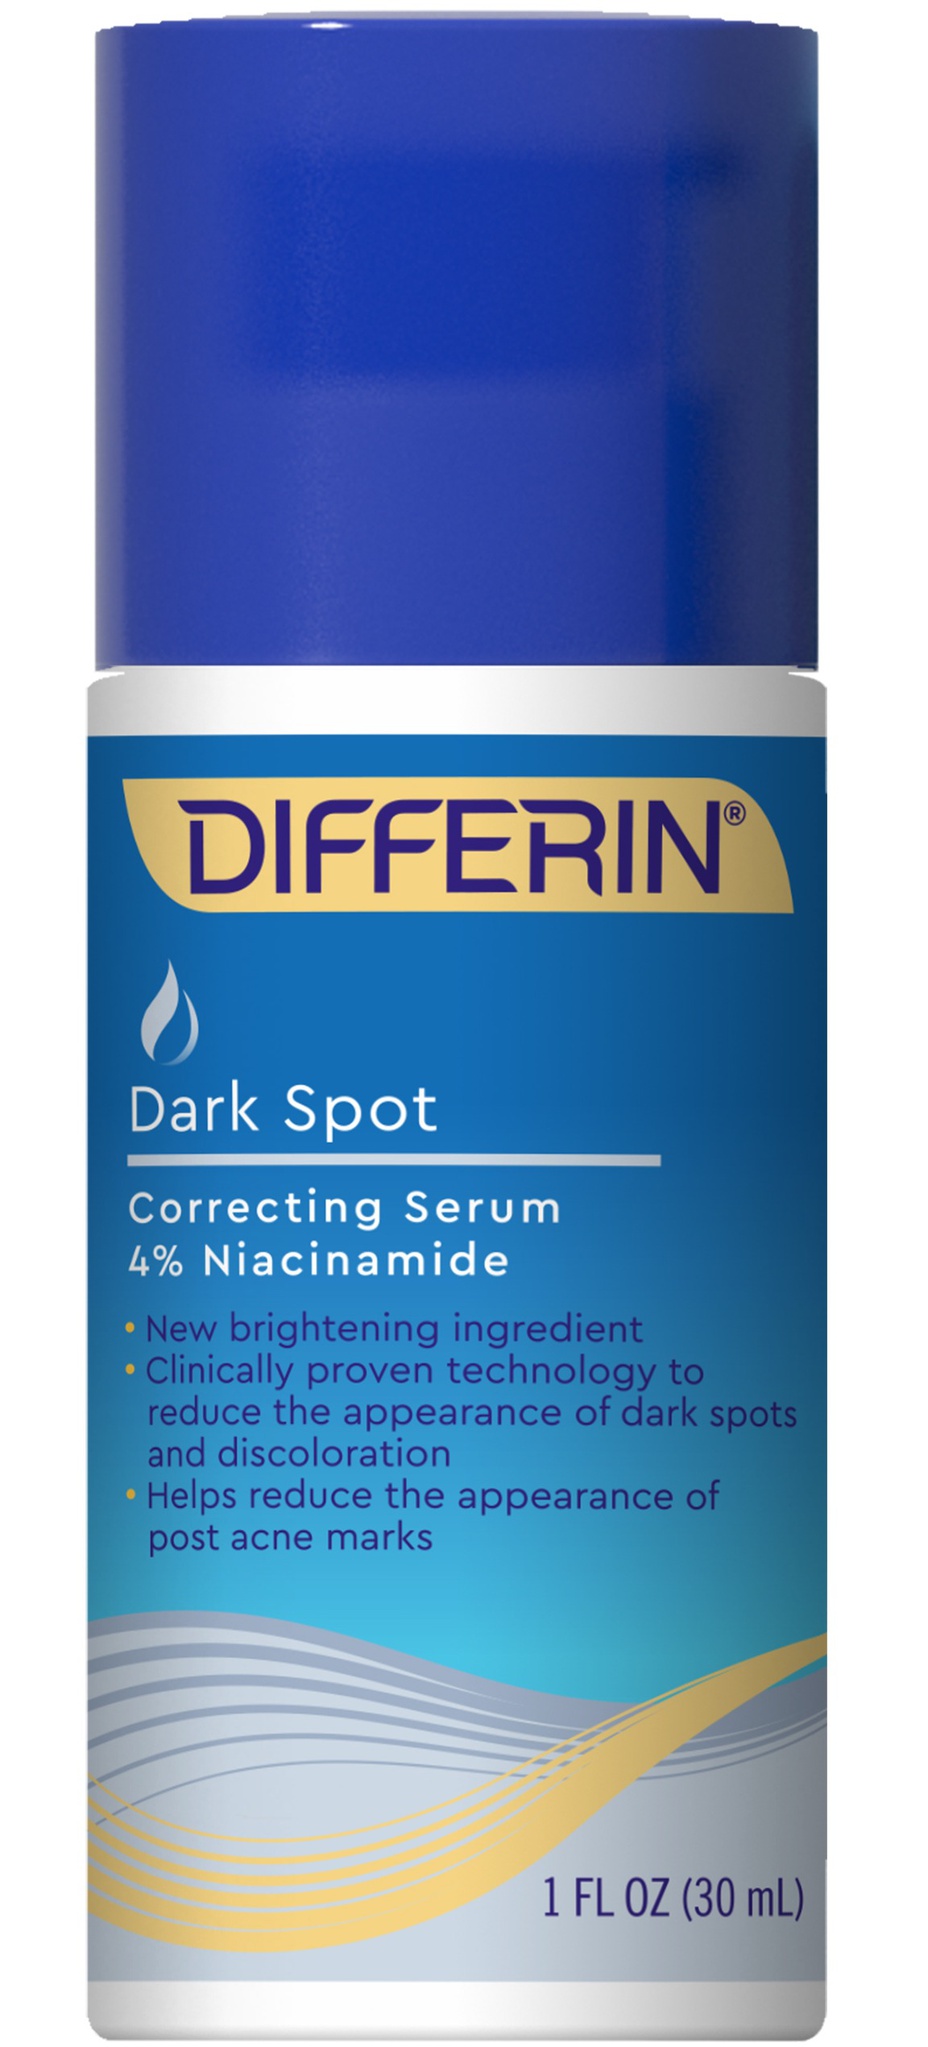 Differin Dark Spot Correcting Serum 4% Niacinamide